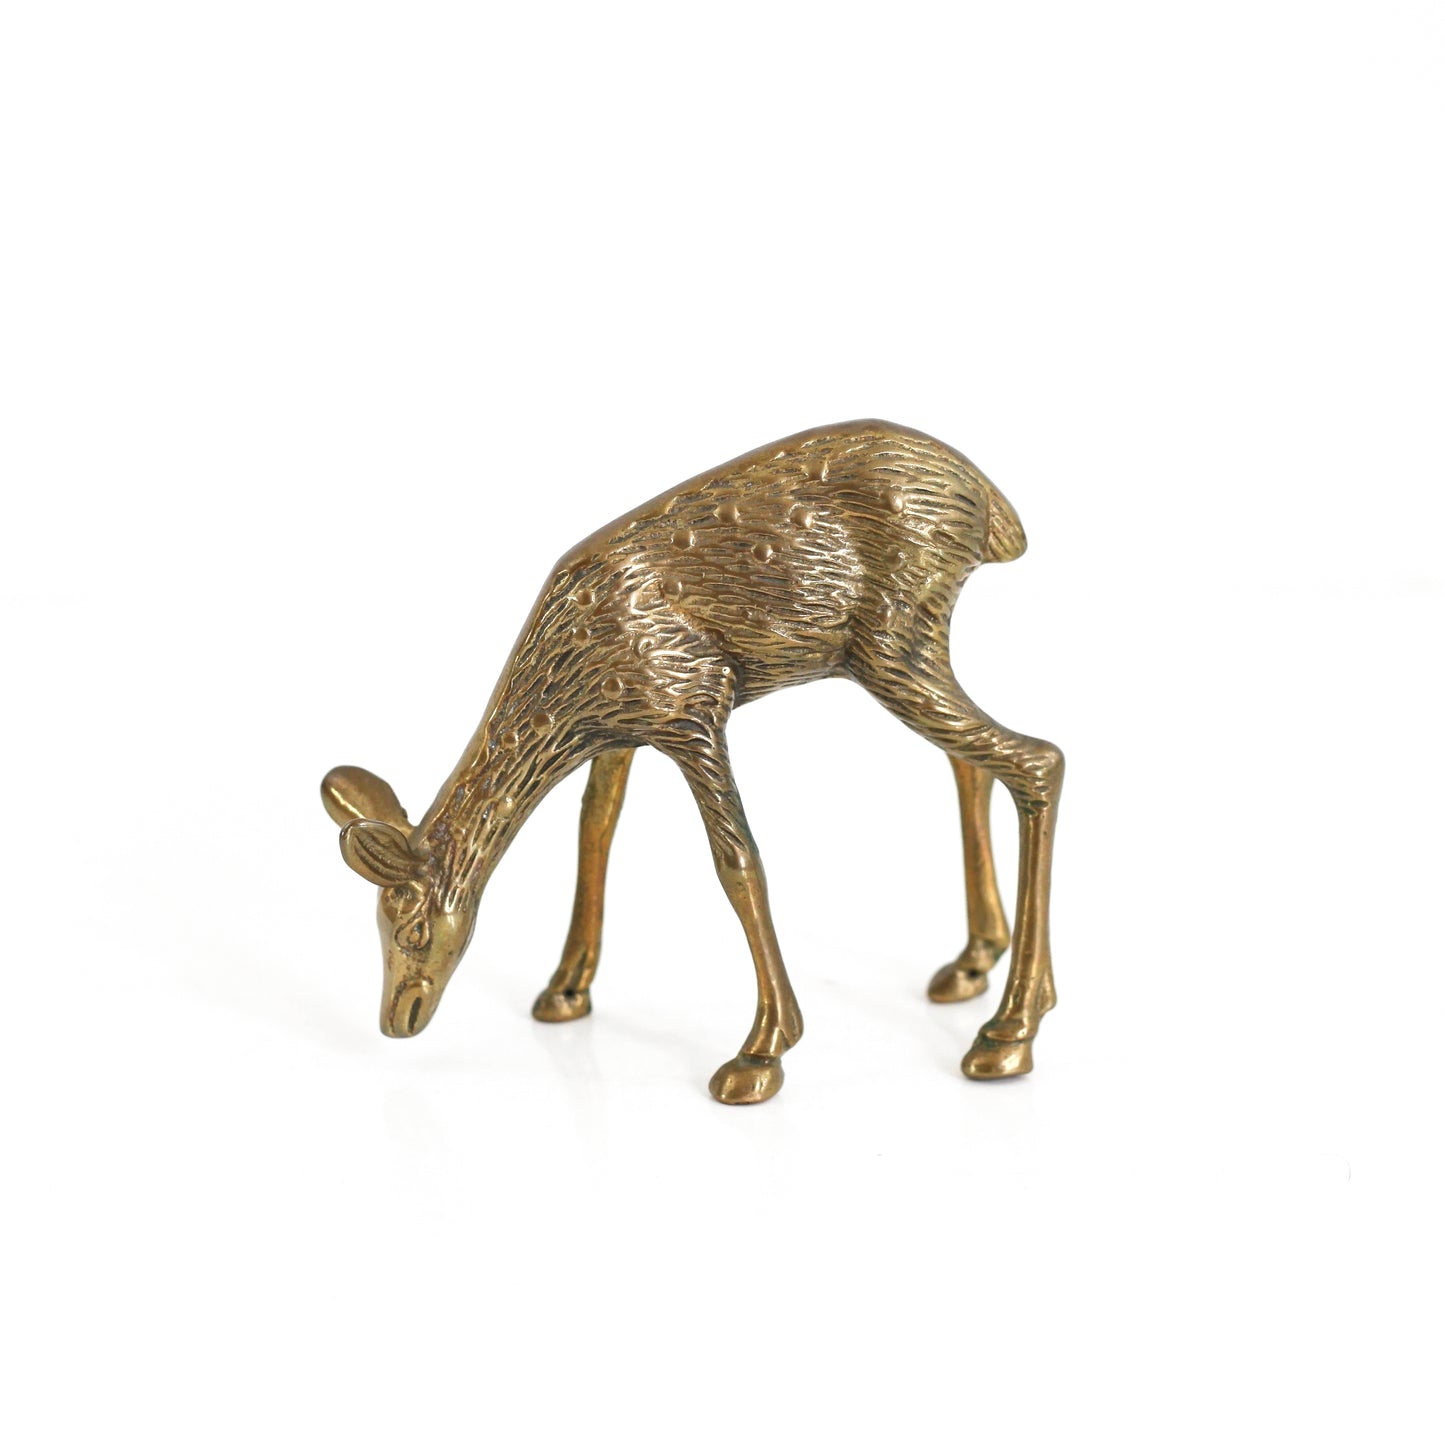 SOLD - Vintage Brass Deer Figurines - Set of Two